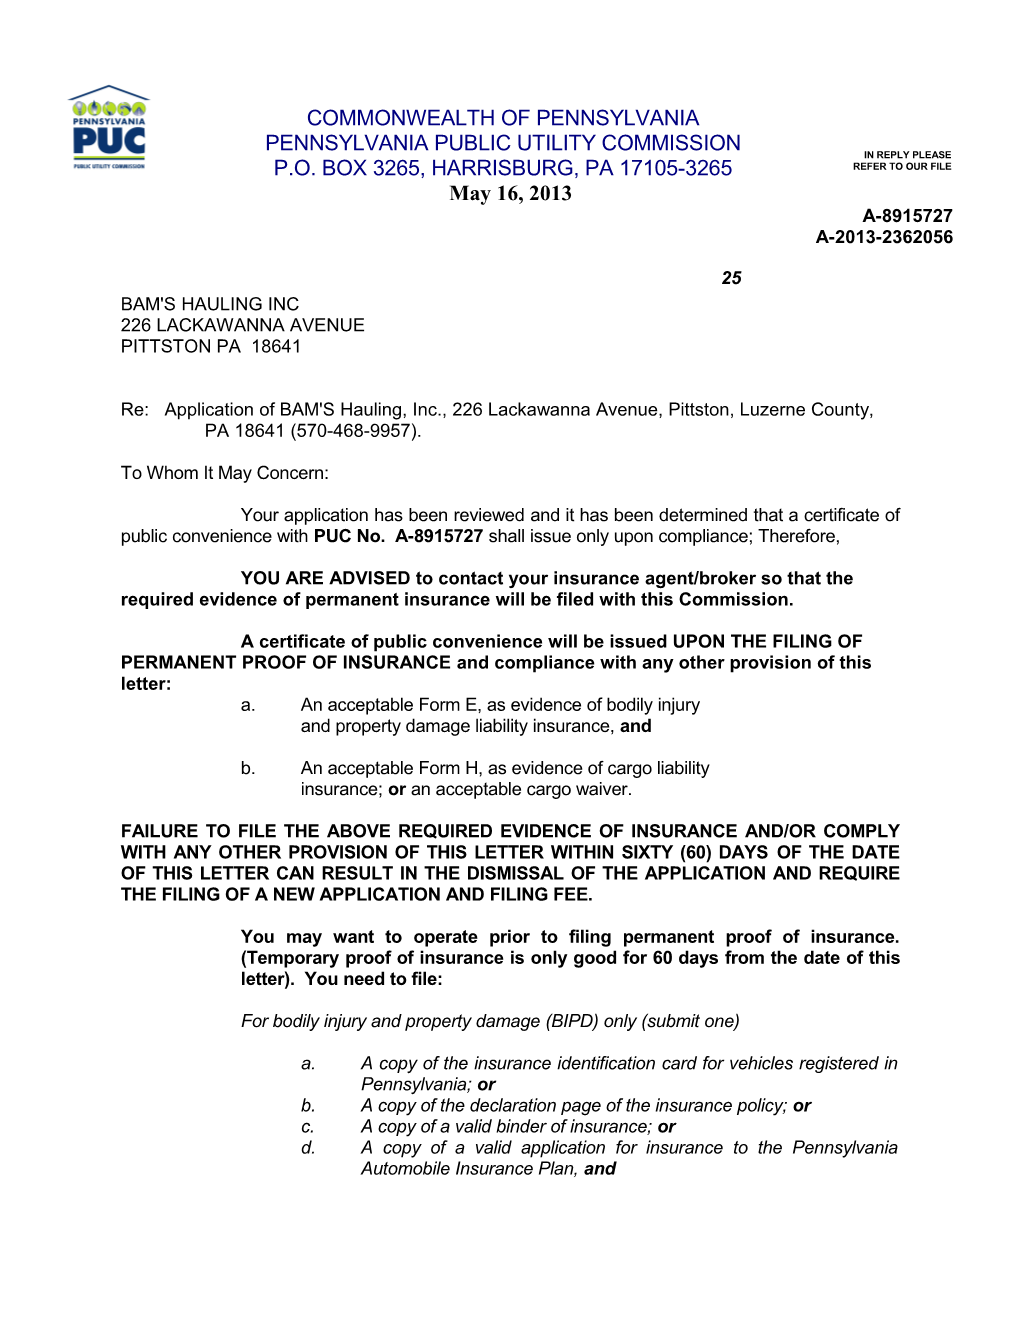 Re: Application of BAM's Hauling, Inc., 226 Lackawanna Avenue, Pittston, Luzerne County